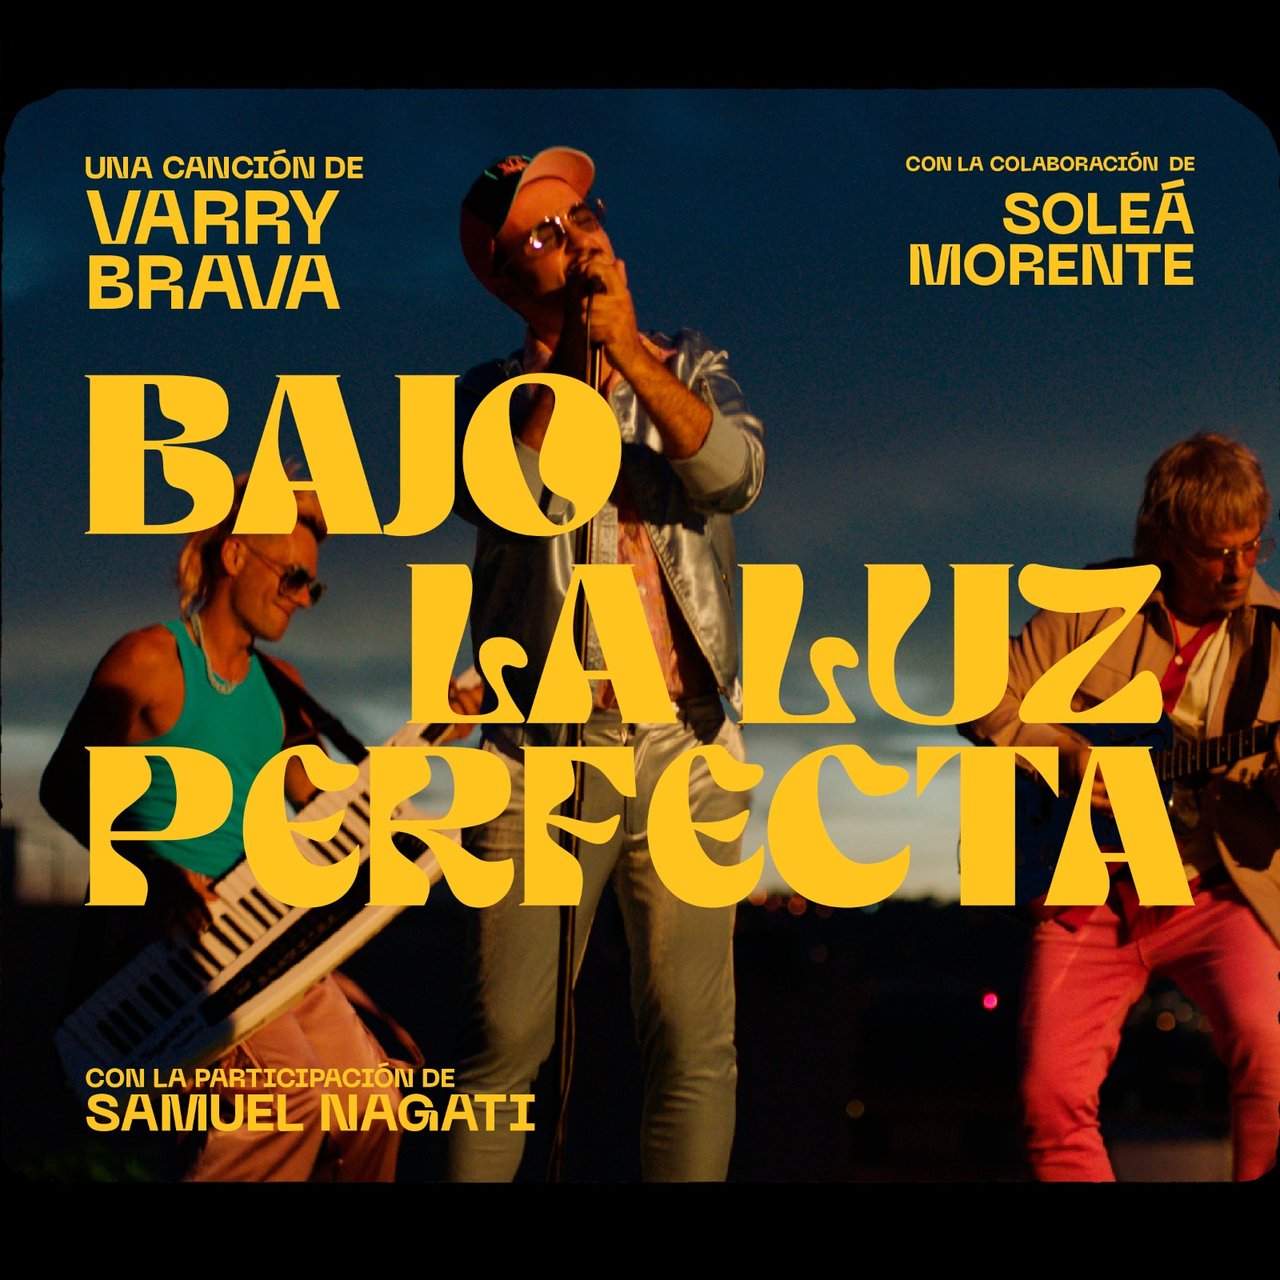 Varry Brava & Soleá Morente featuring Samuel Nagati — Bajo la Luz Perfecta cover artwork